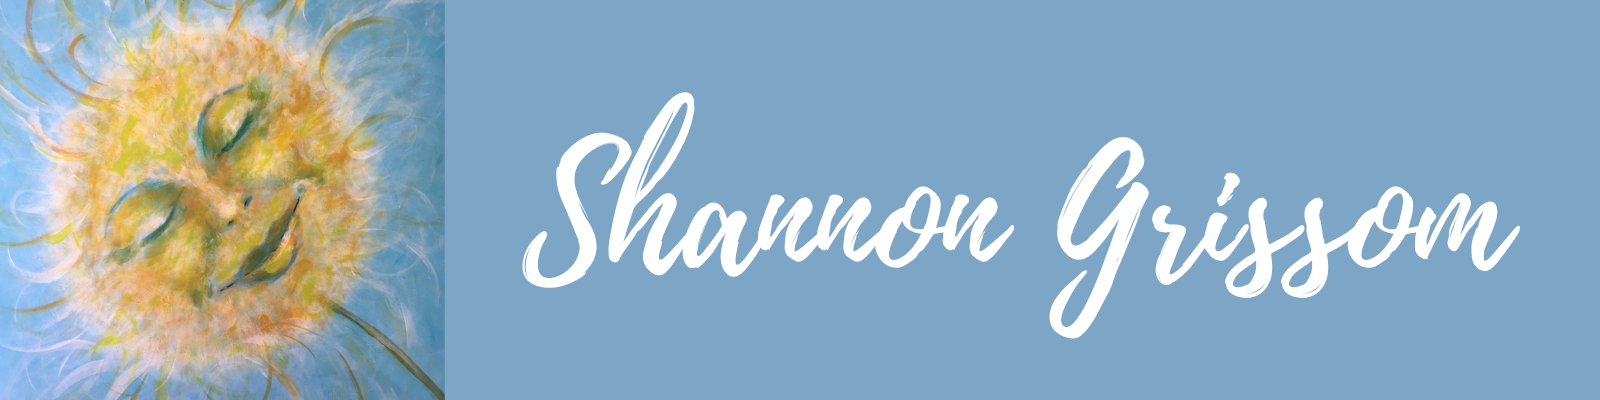 Shannon Grissom - Website